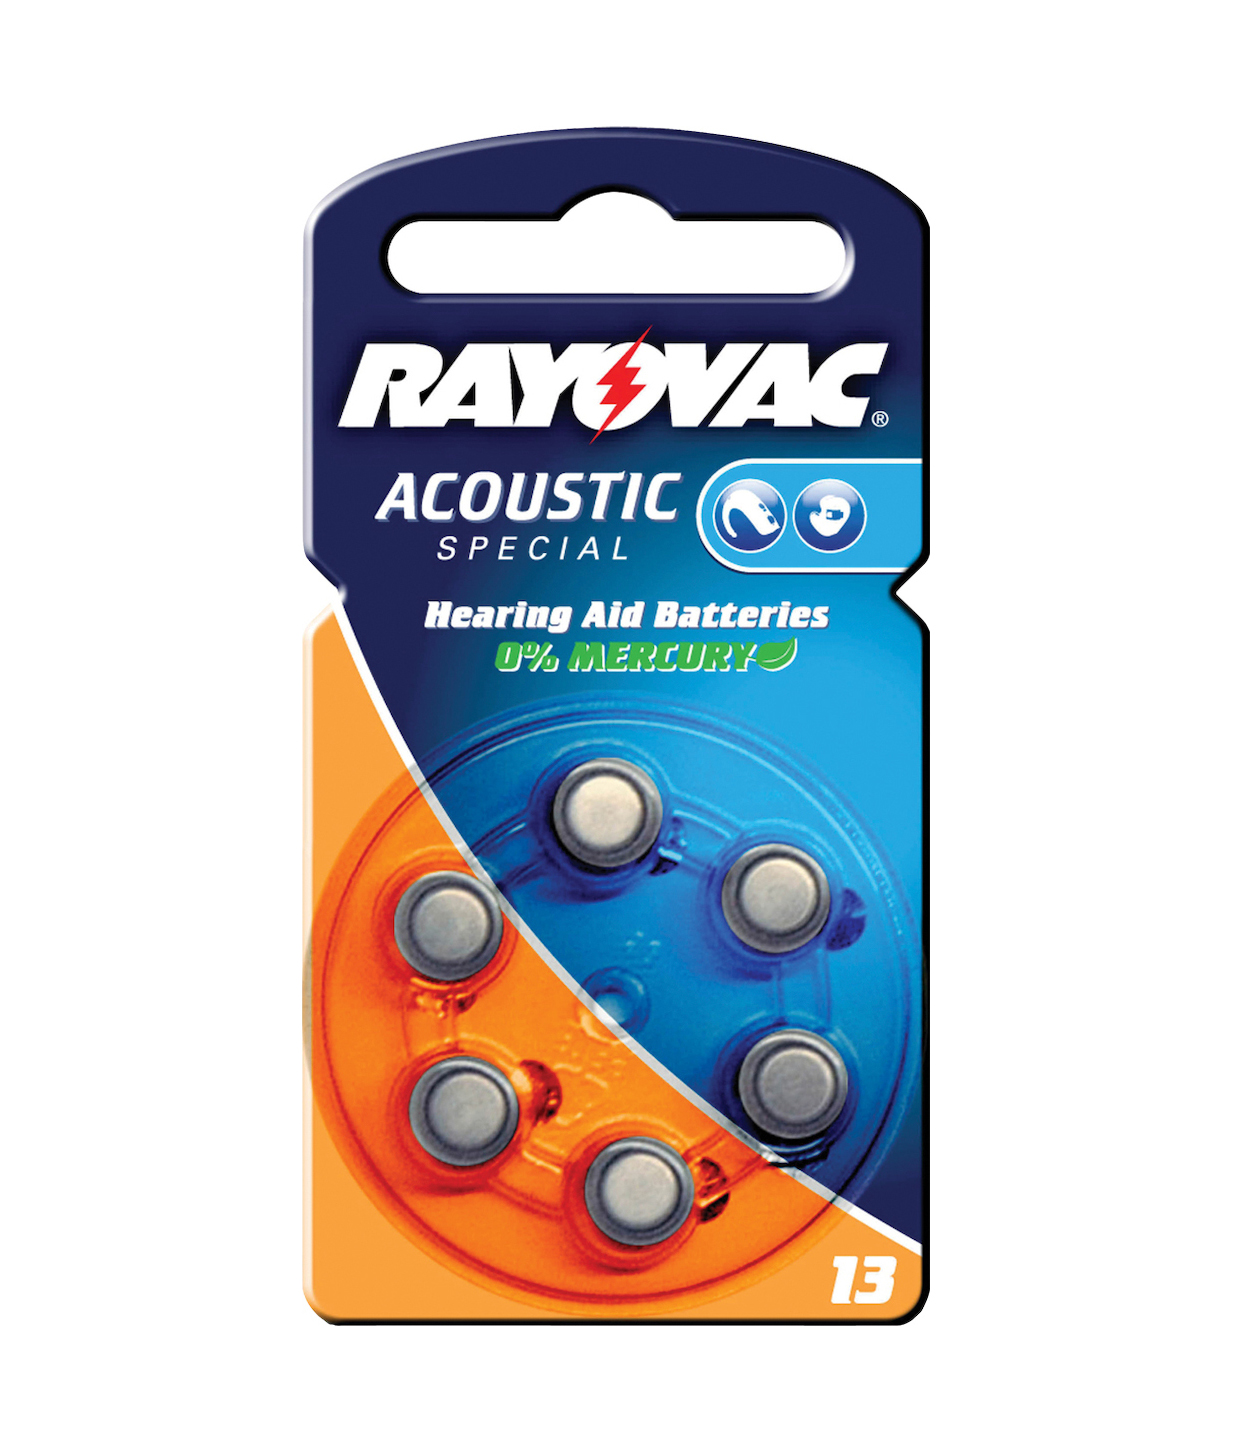 Rayovac Acoustic Special Μπαταρίες Ακουστικών Βαρηκοΐας 13/PR48 1.45V 6τμχ